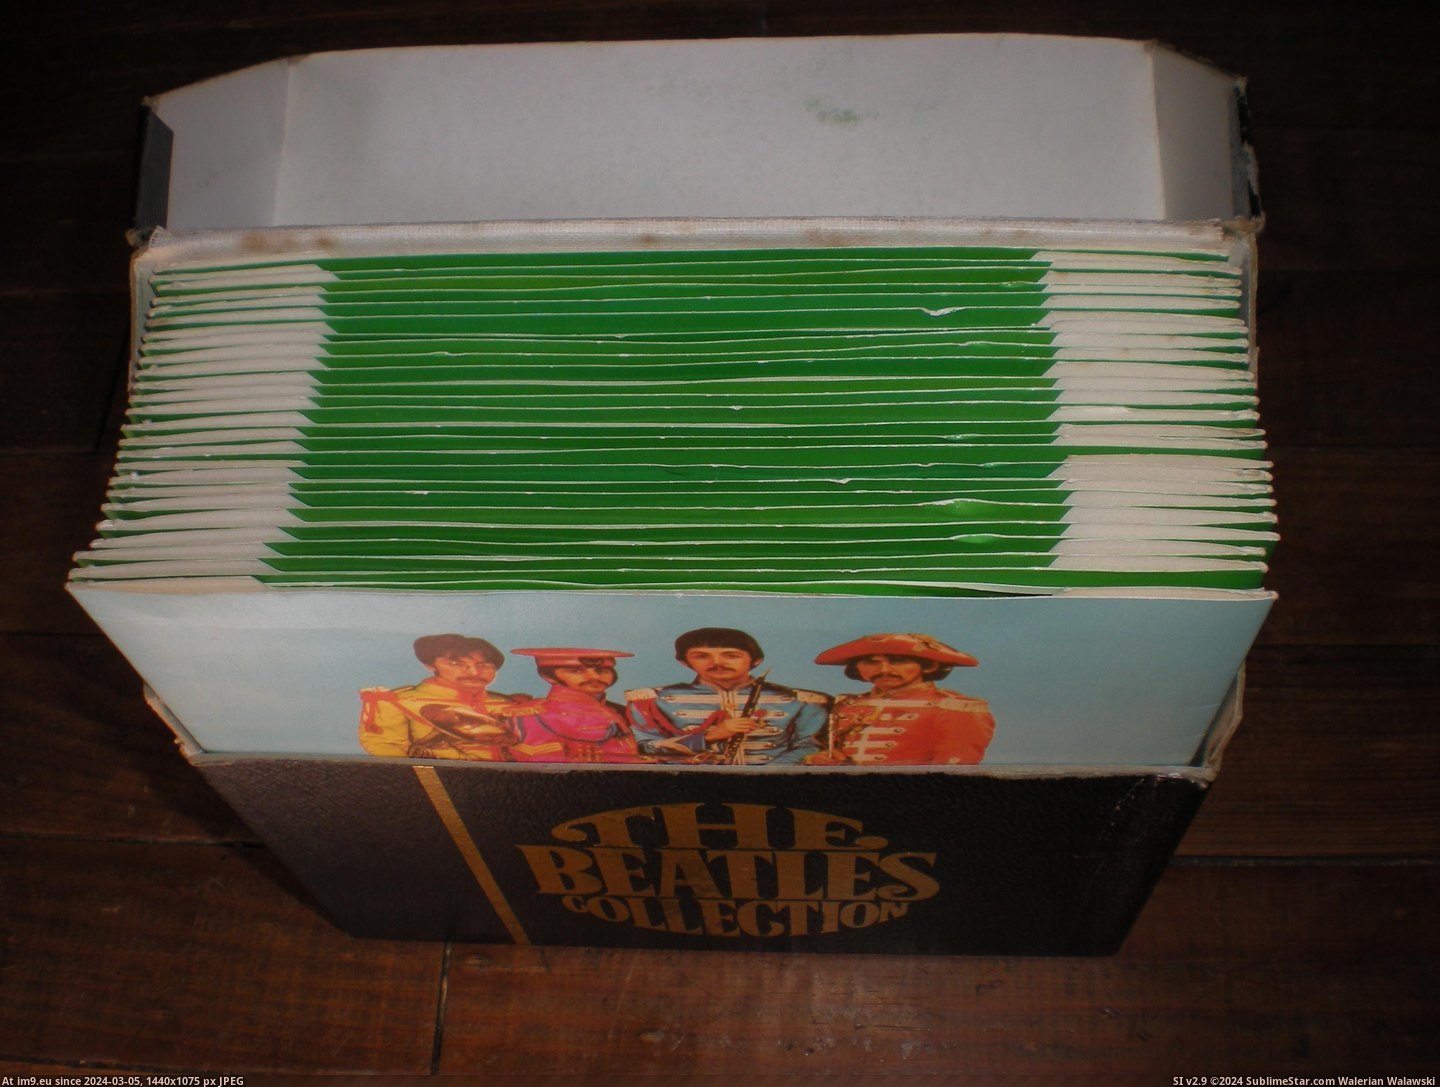 #Collection #Beatles #Box Beatles Collection Box 3 Pic. (Obraz z album new 1))